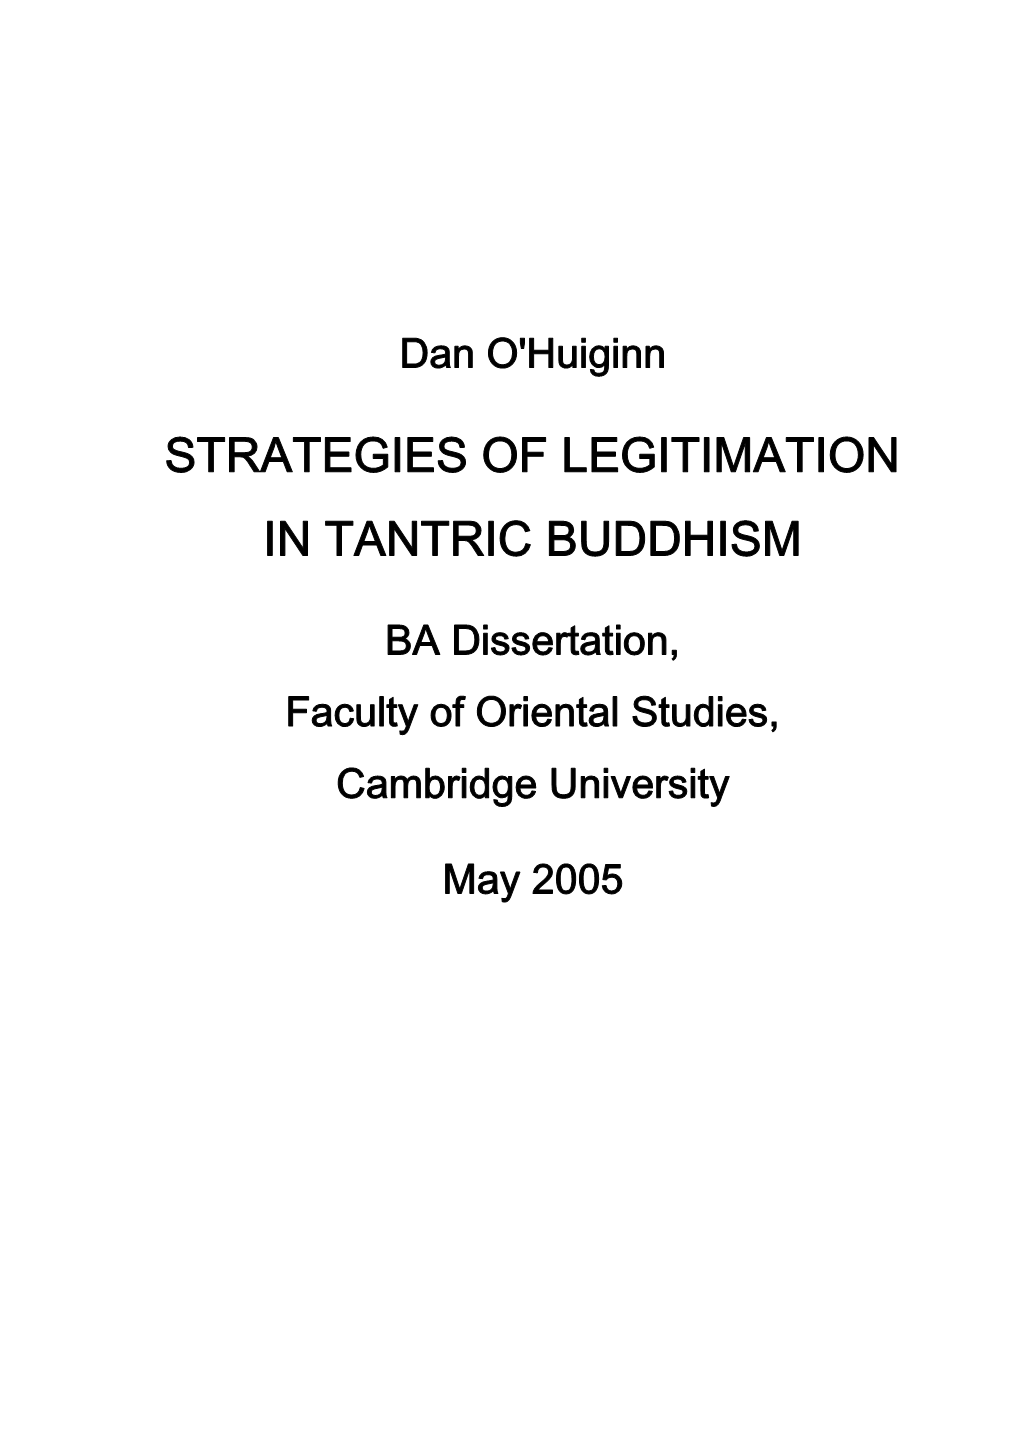 Strategies of Legitimation in Tantric Buddhism